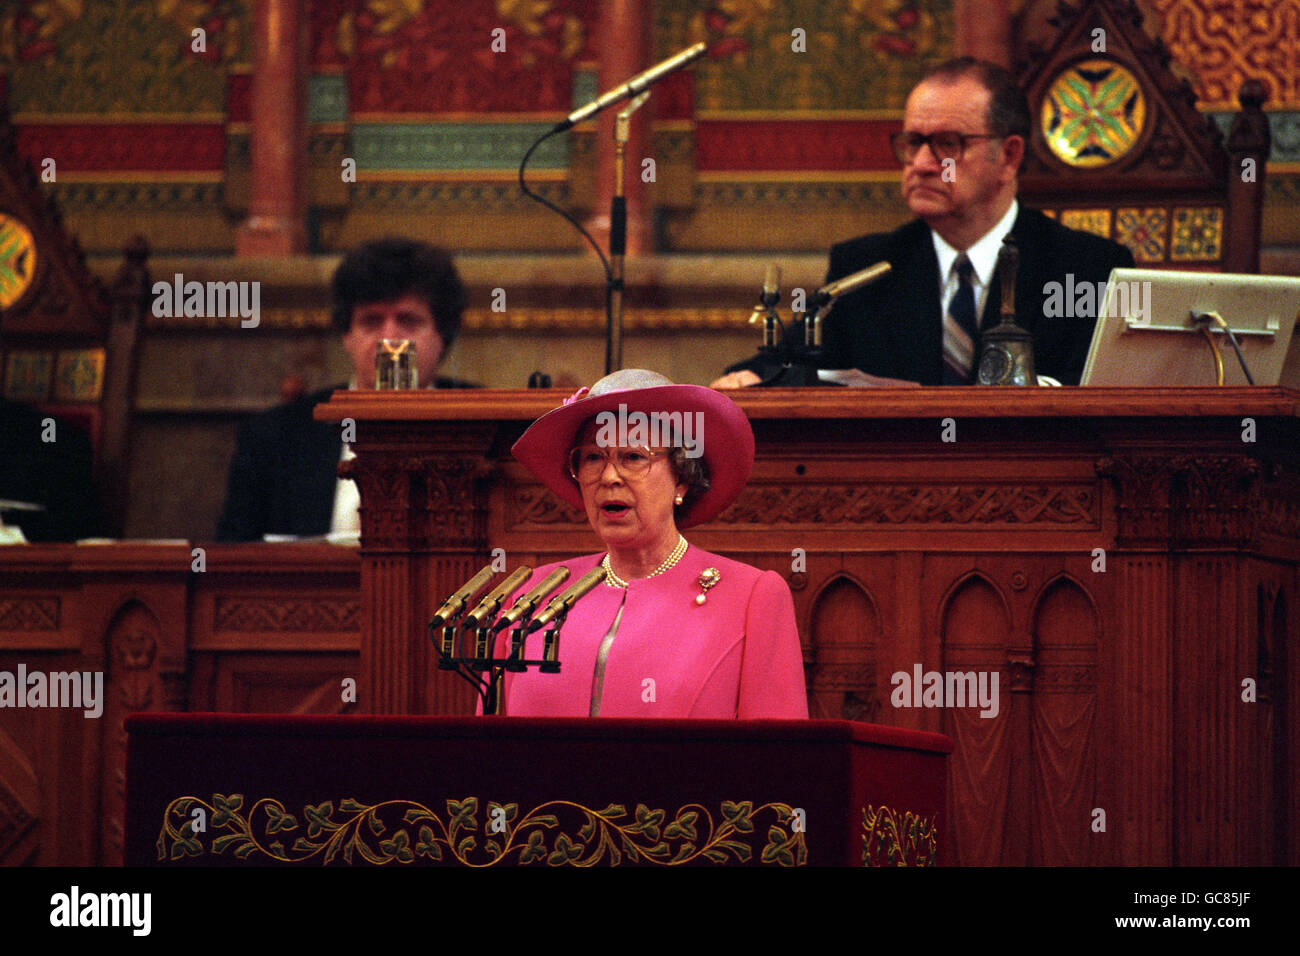 Royalty - Königin Elizabeth II Staatsbesuch in Ungarn Stockfoto